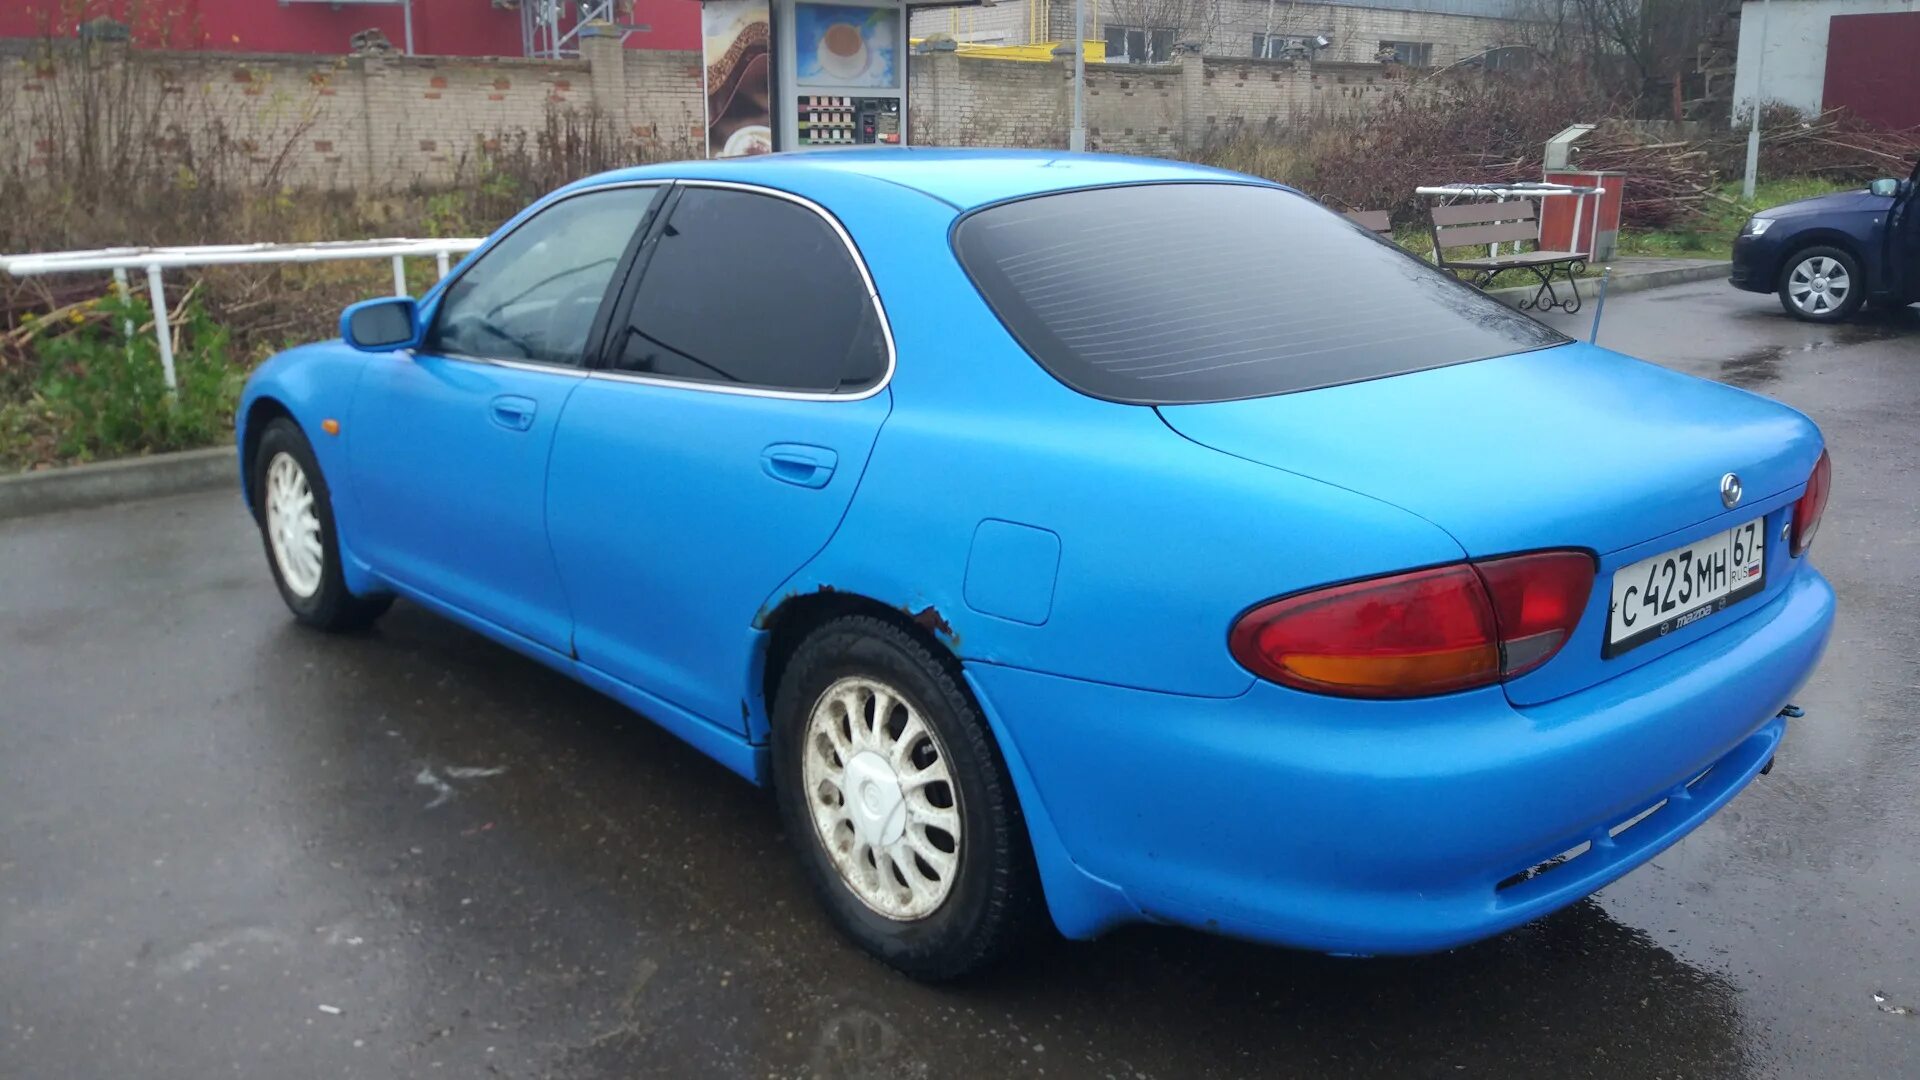 Мазда кседос купить. Mazda xedos 6. Мазда Кседос 1996. Мазда Кседос 6 синяя. Мазда Кседос 6 2.0.